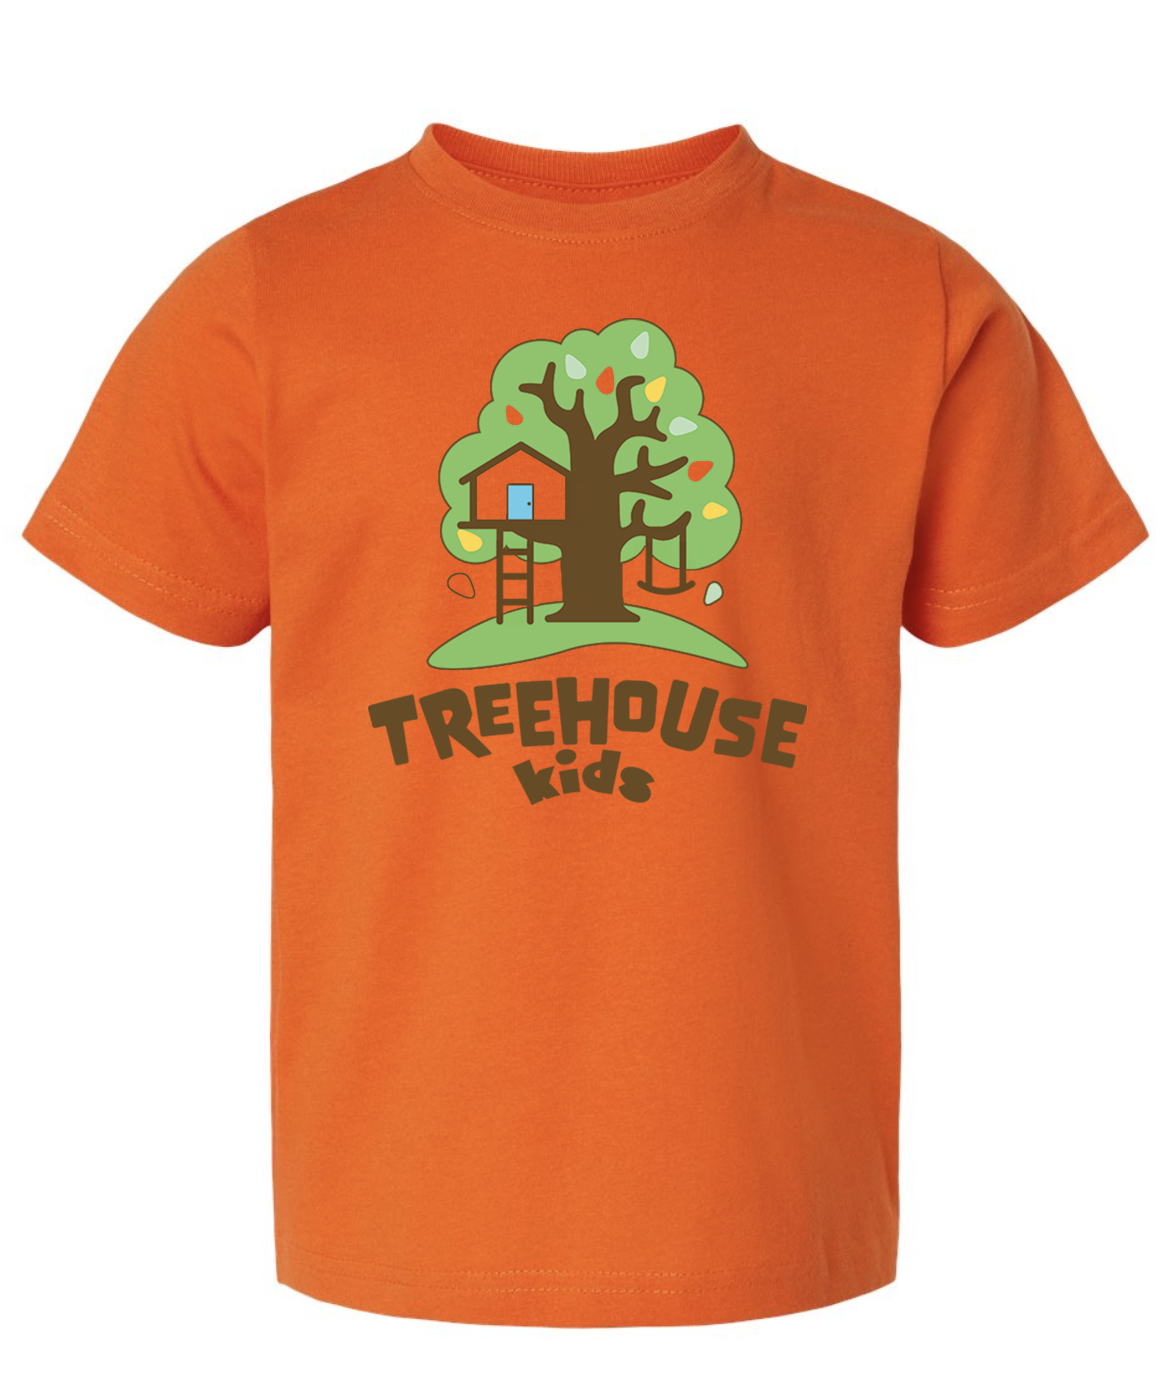 Faith Arlington Treehouse Kids Shirt (Kids & Youth Sizes)